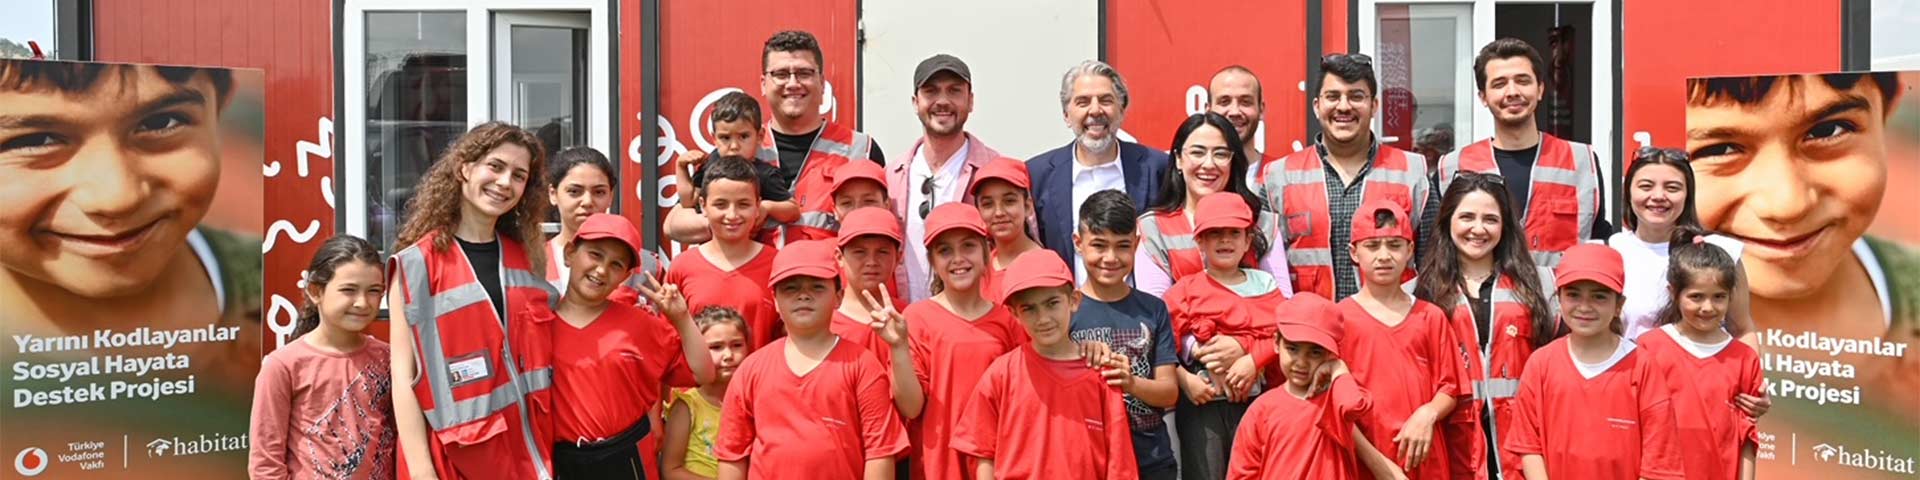 Aras Bulut Iynemli Met Children in Kahramanmaraş as Part of the "Coding Tomorrow" Project, Initiated by Vodafone Turkey Foundation